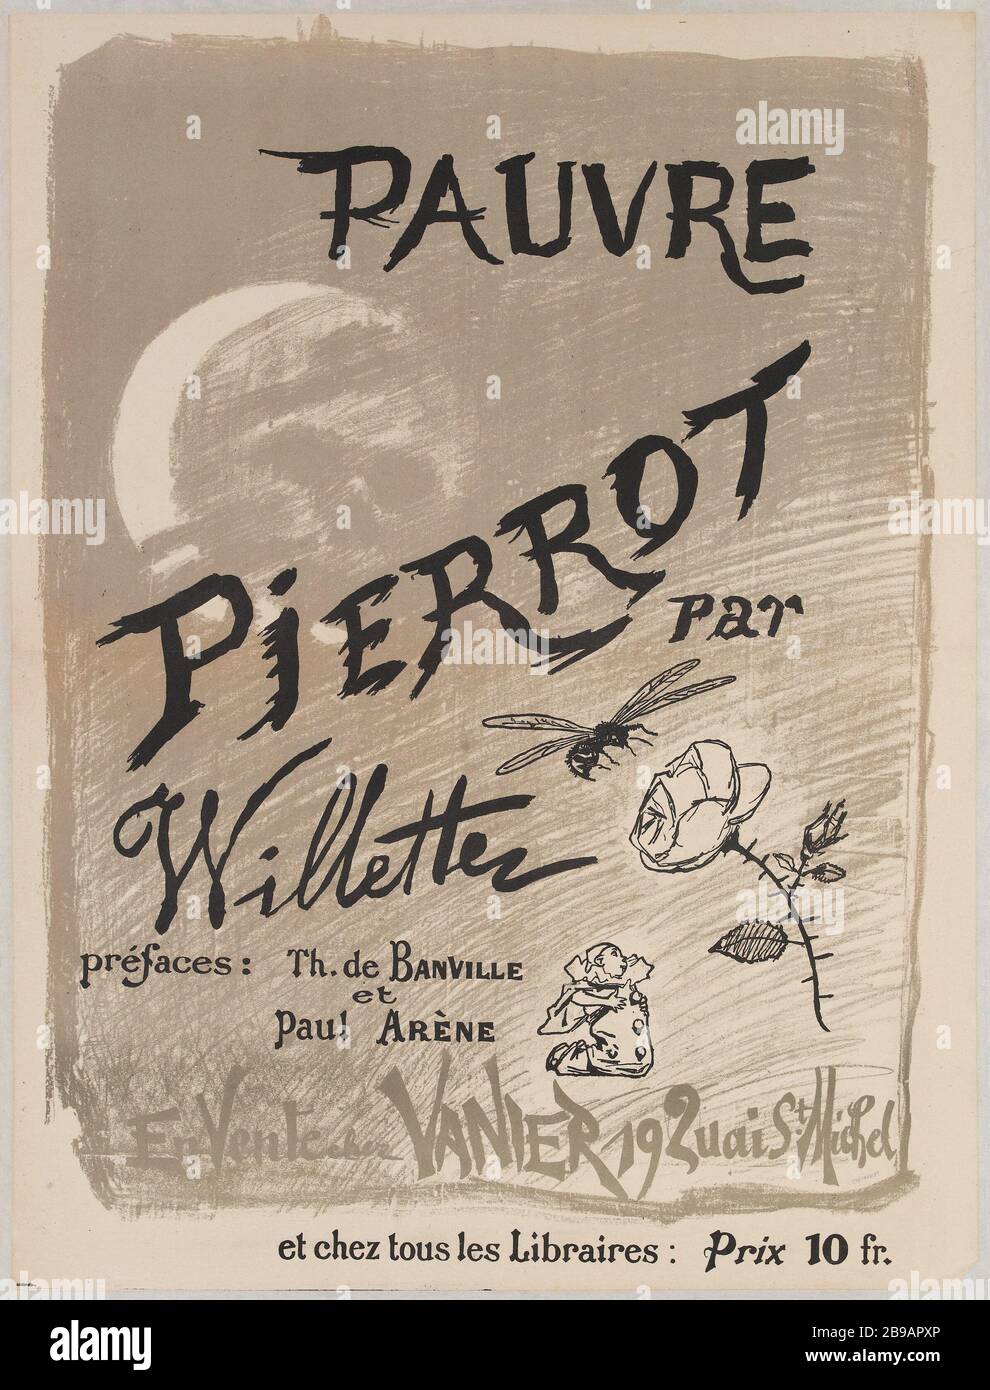 Povero Pierrot Adolphe Willette. "Pauvre Pierrot". Lithographie, 1880-1900. Parigi, musée Carnavalet. Foto Stock